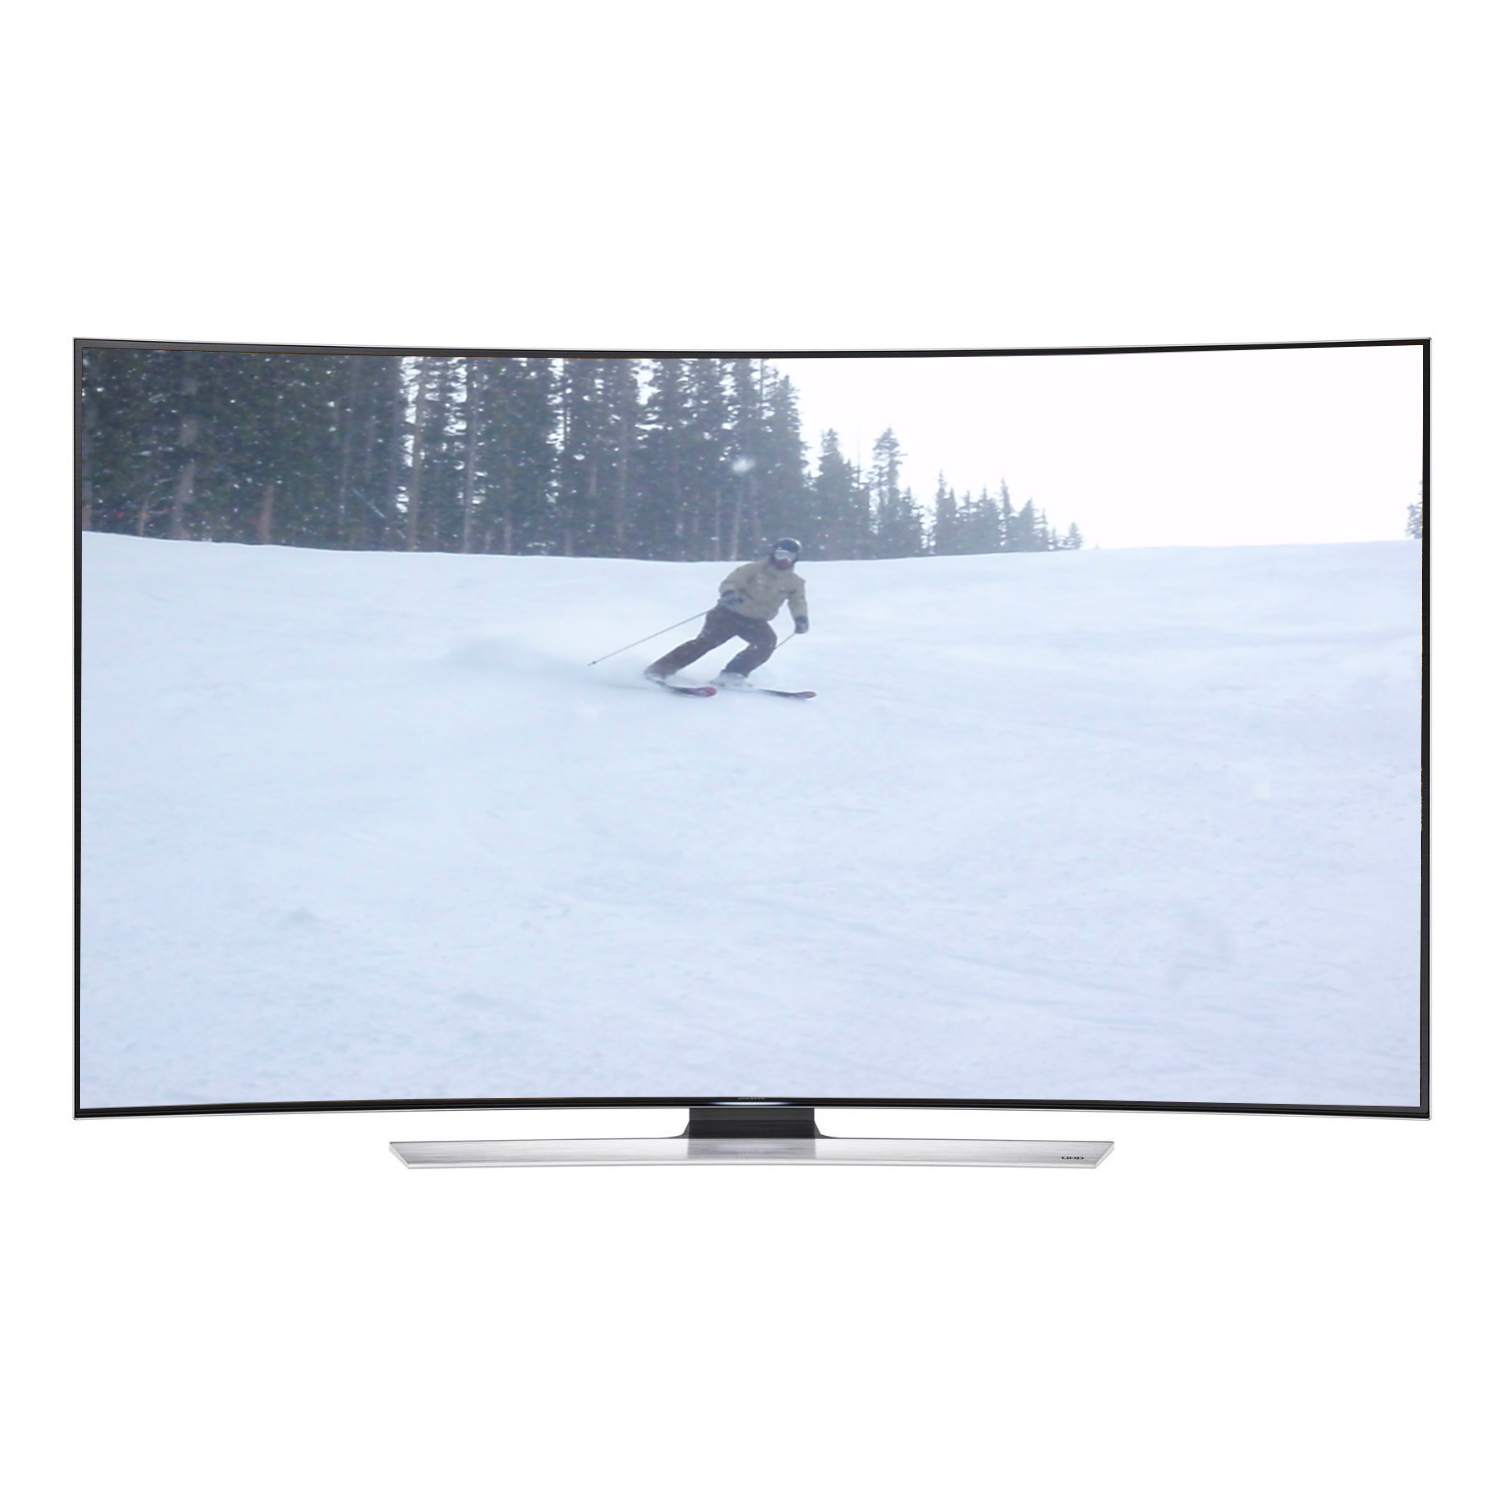 Samsung Refurbished 65" Class 4K Ultra HD Curved 3D LED Smart HDTV - UN65HU9000